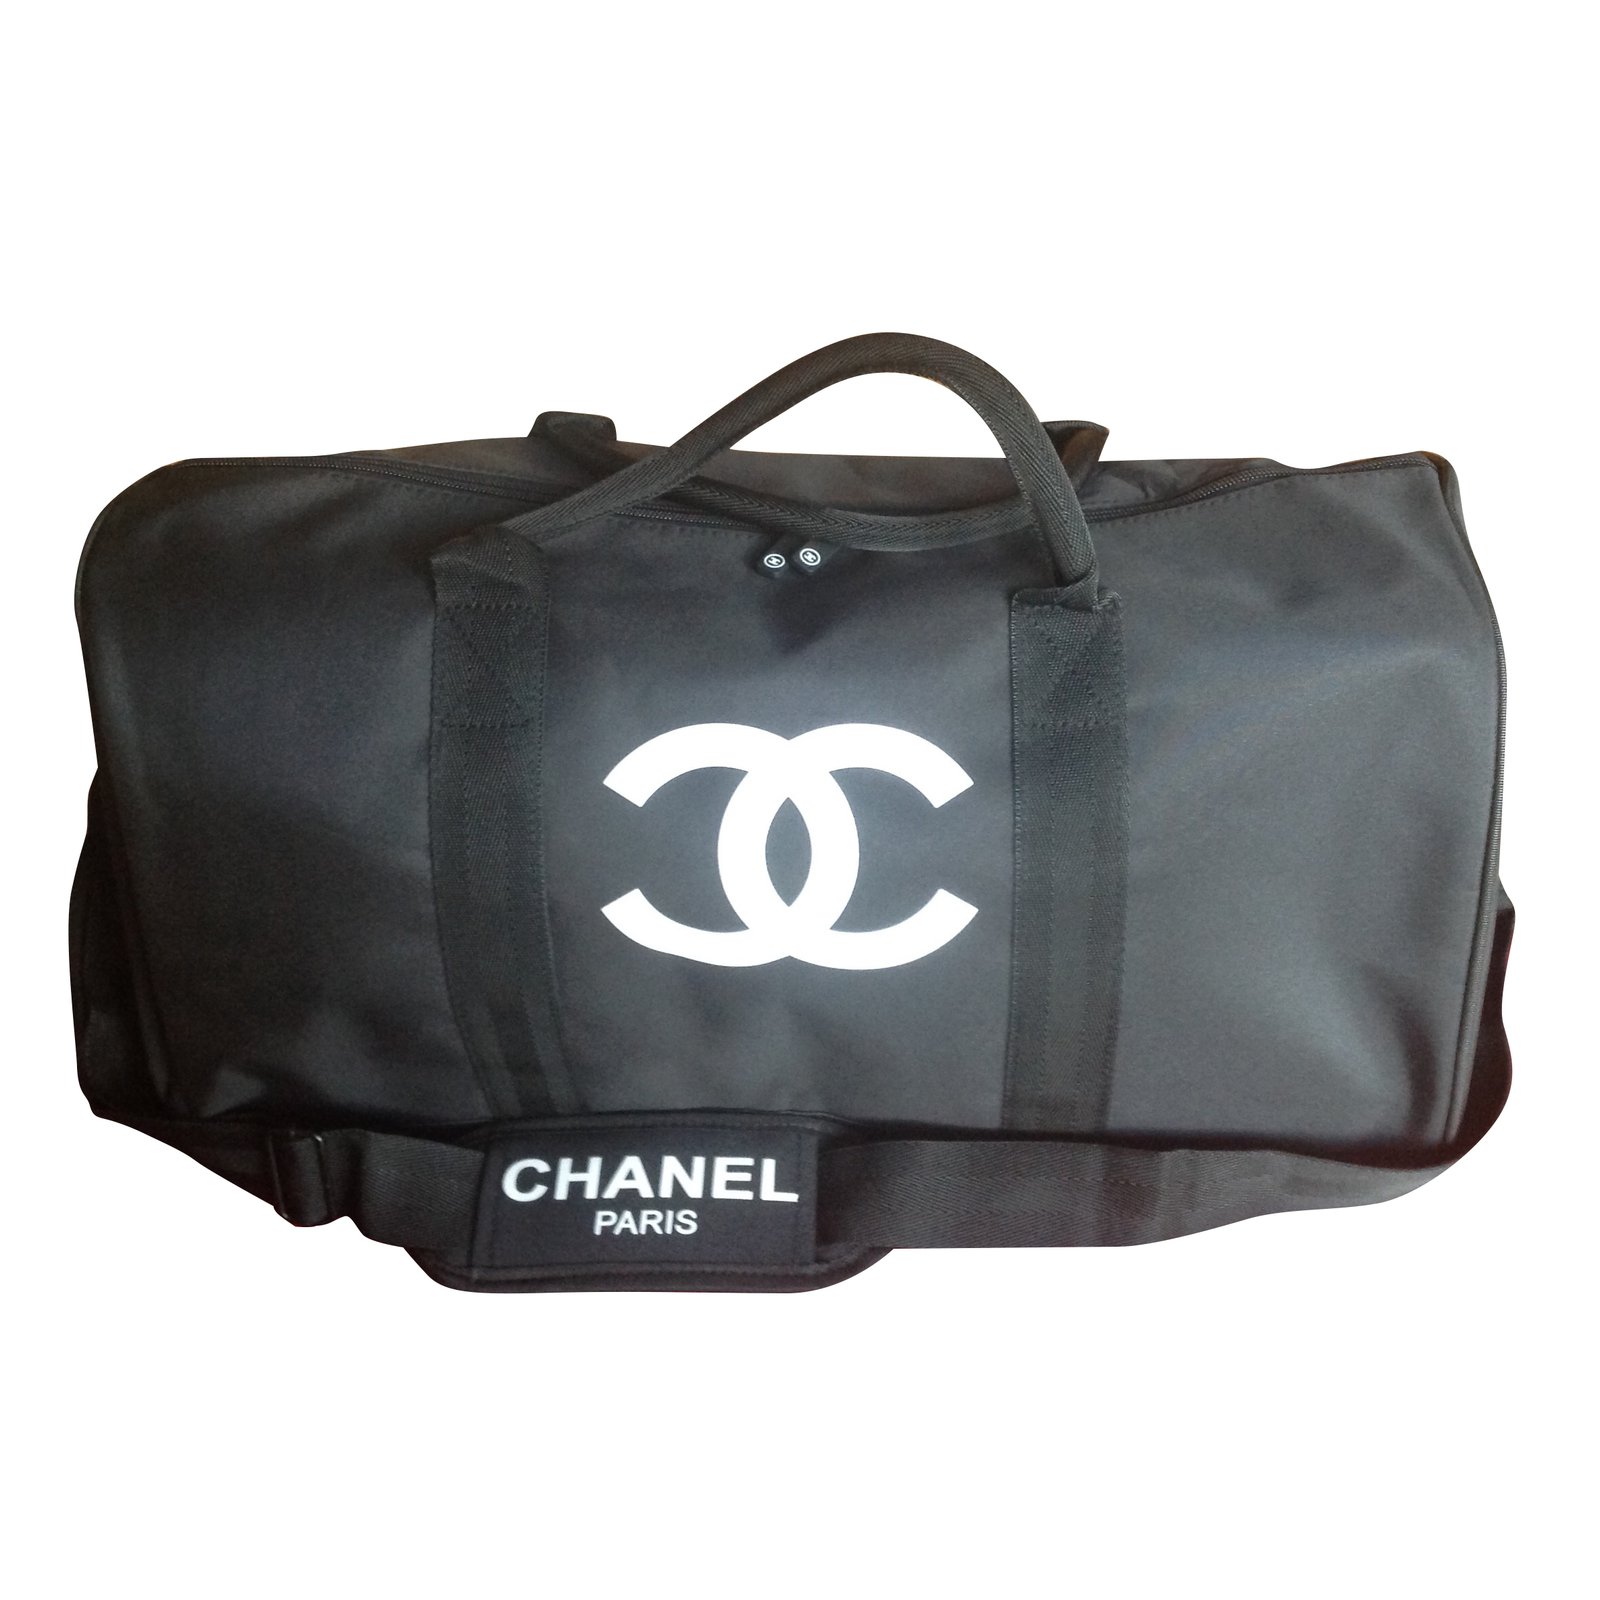 Chanel Gift Bag | Paul Smith